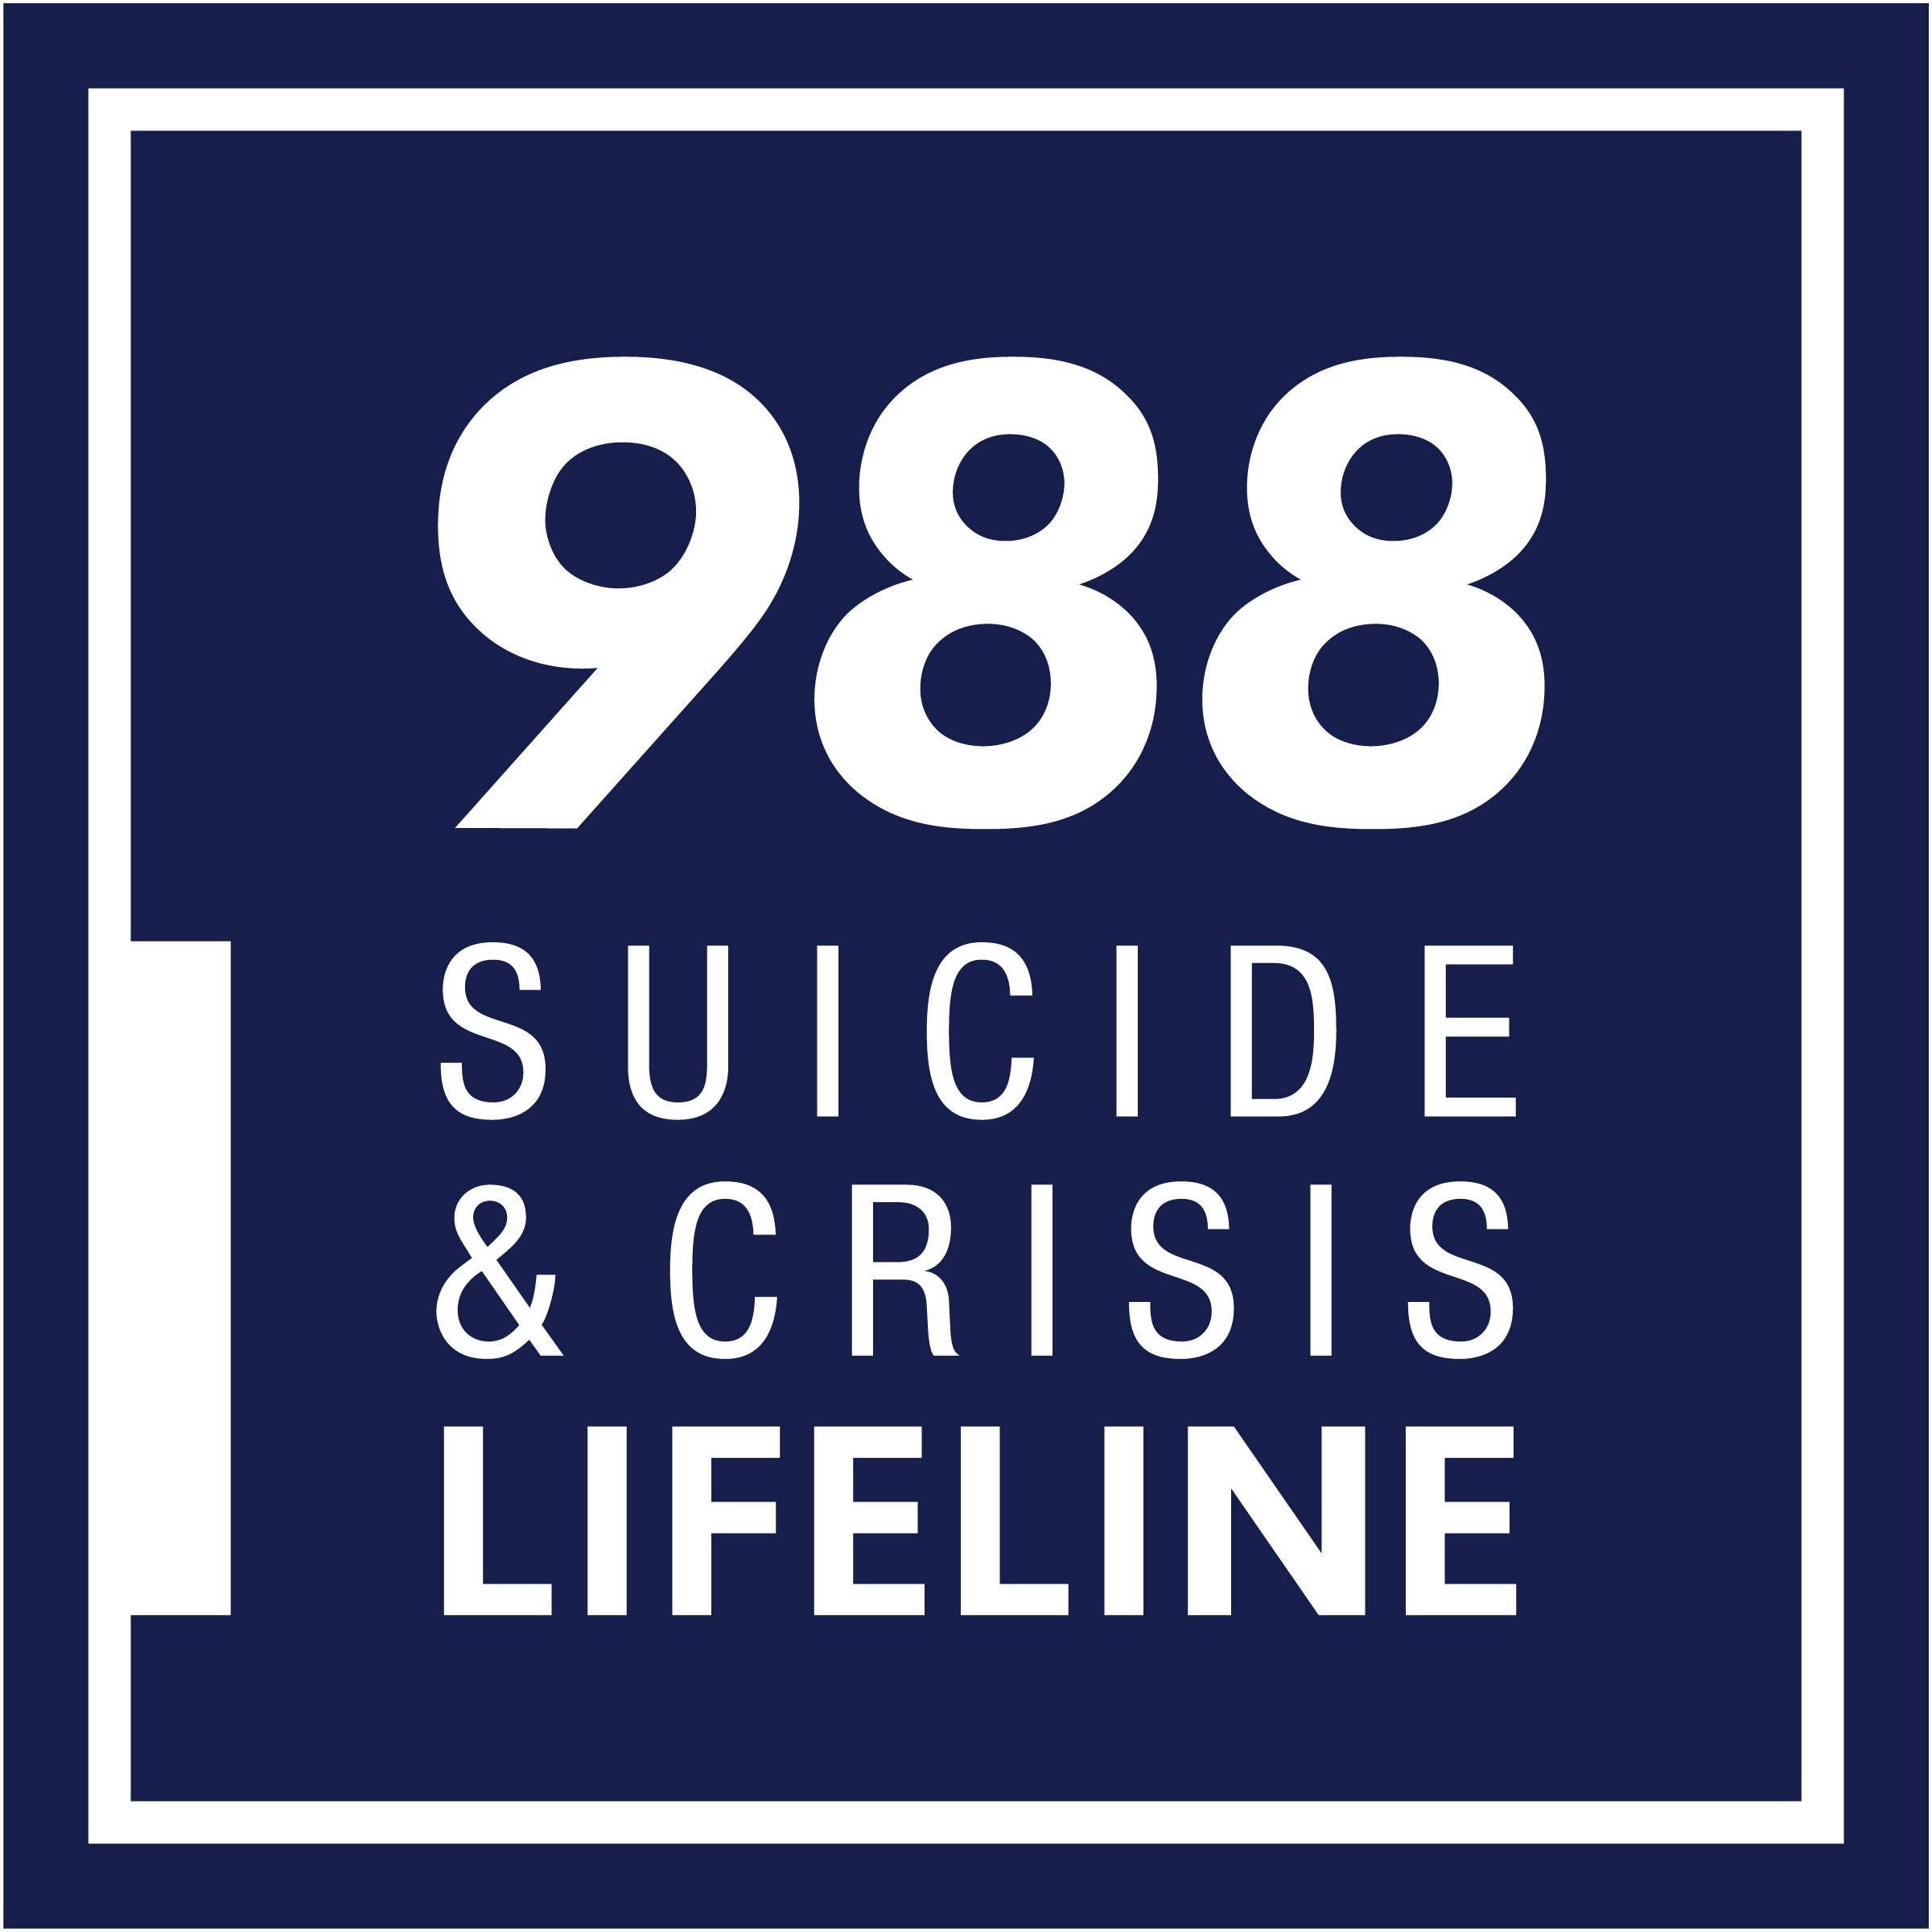 988 Suicide & Crisis Lifeline on blue background